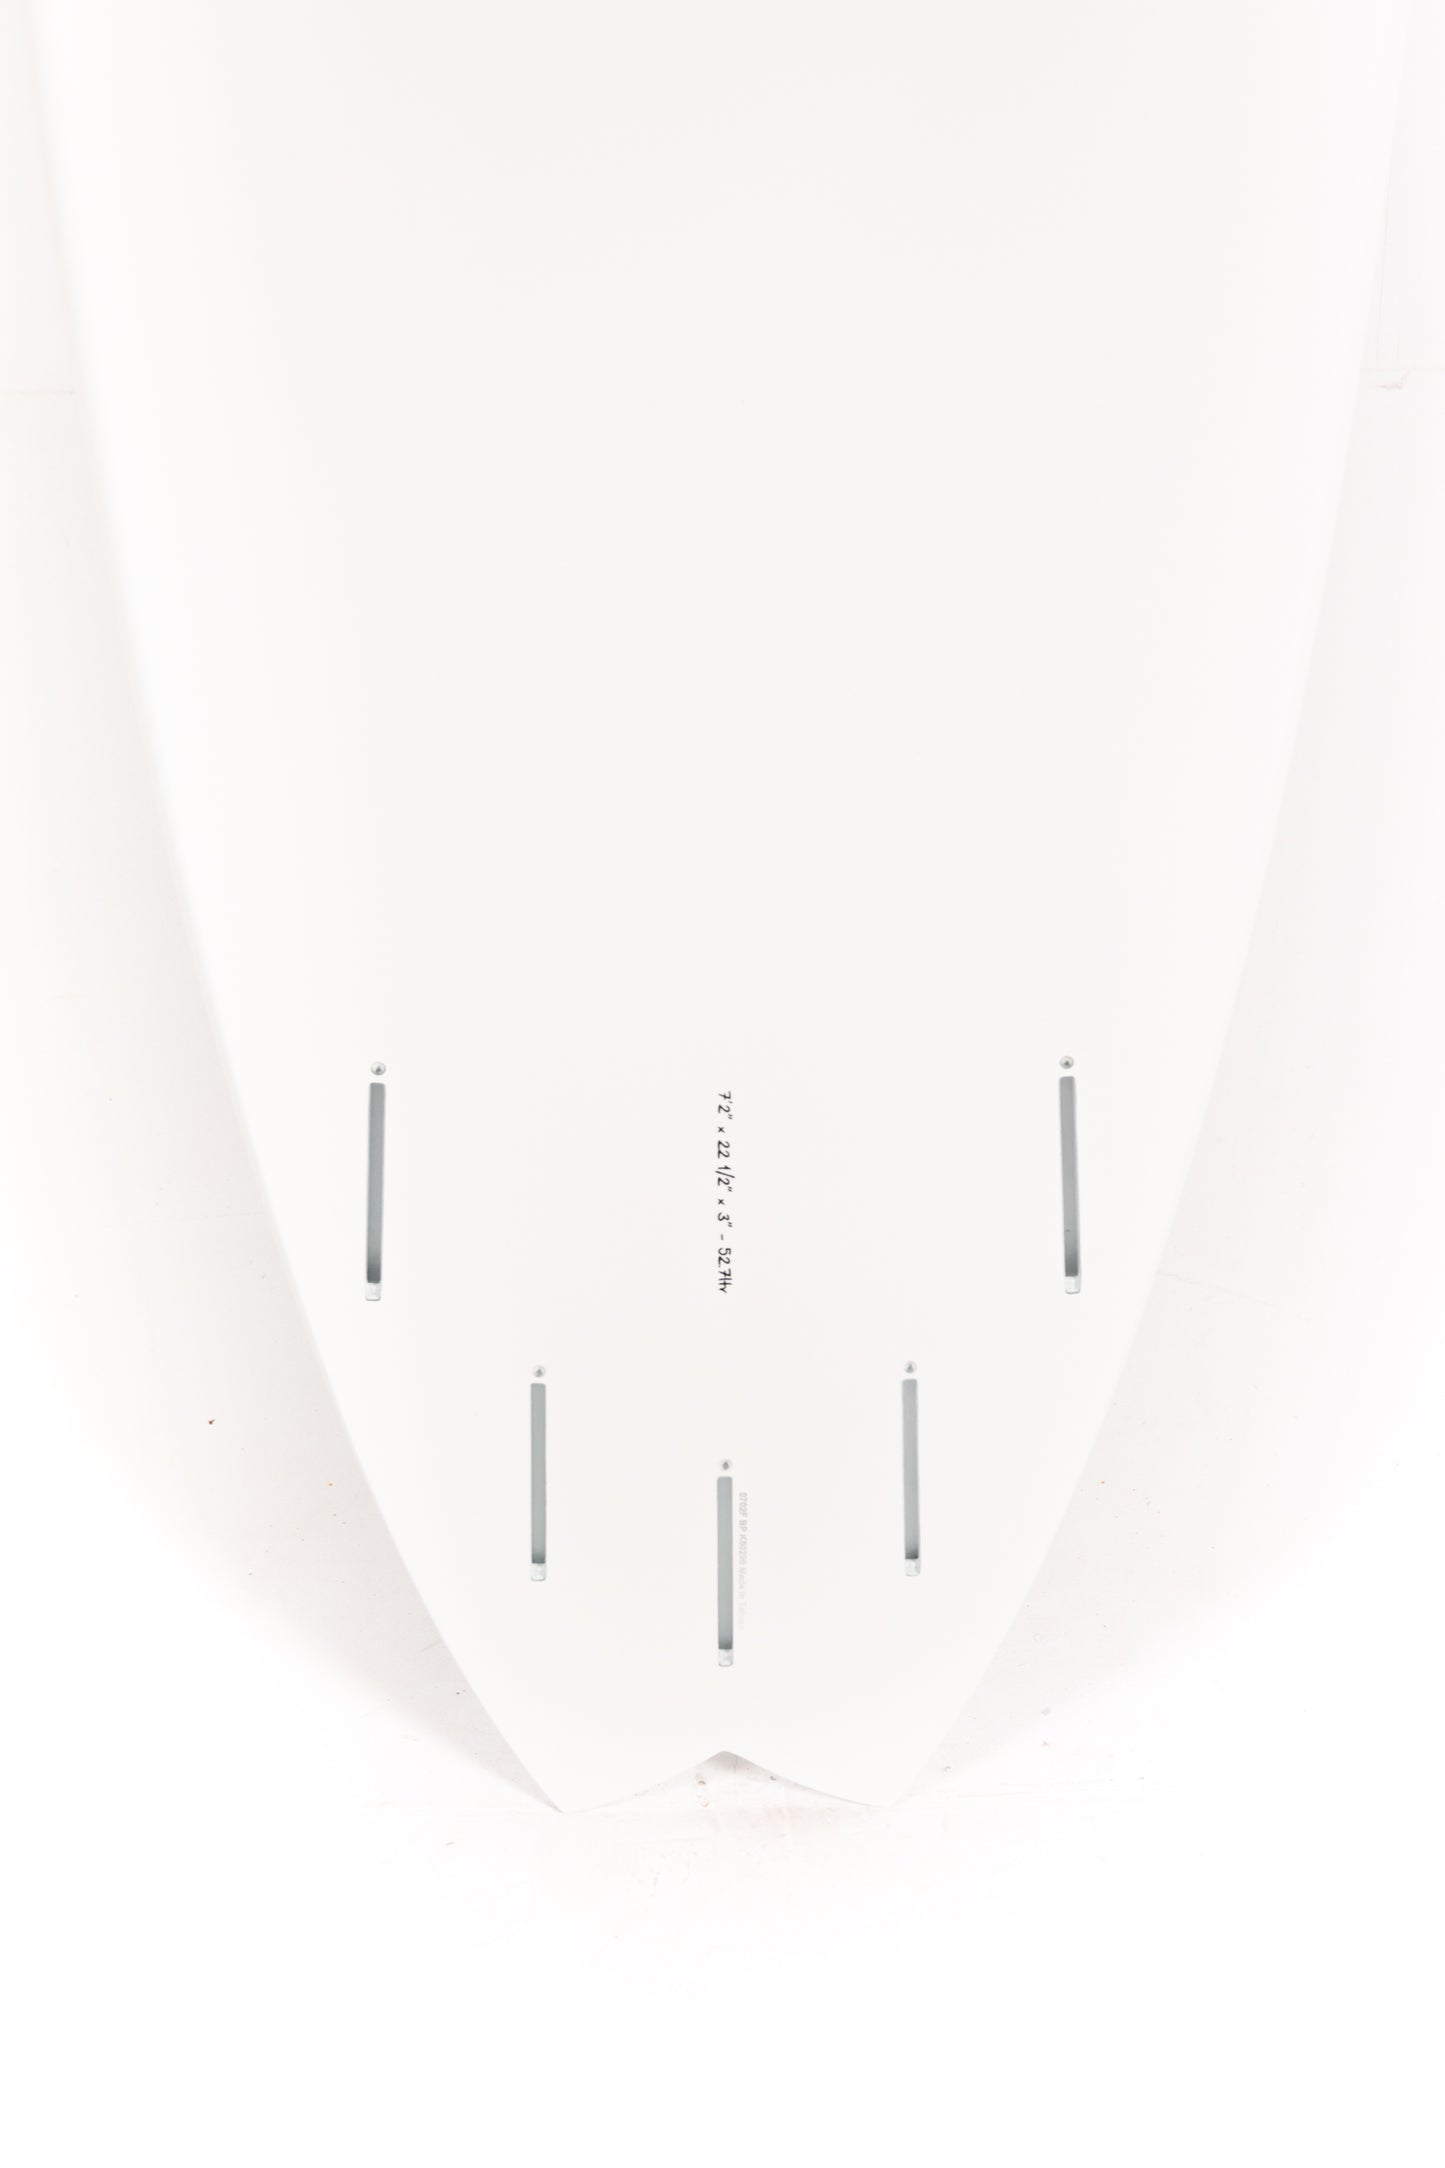 
                  
                    Pukas Surf Shop - Torq Surfboards - MODFISH - 7'2" x 22 1/2 x 3 - 52,7L
                  
                